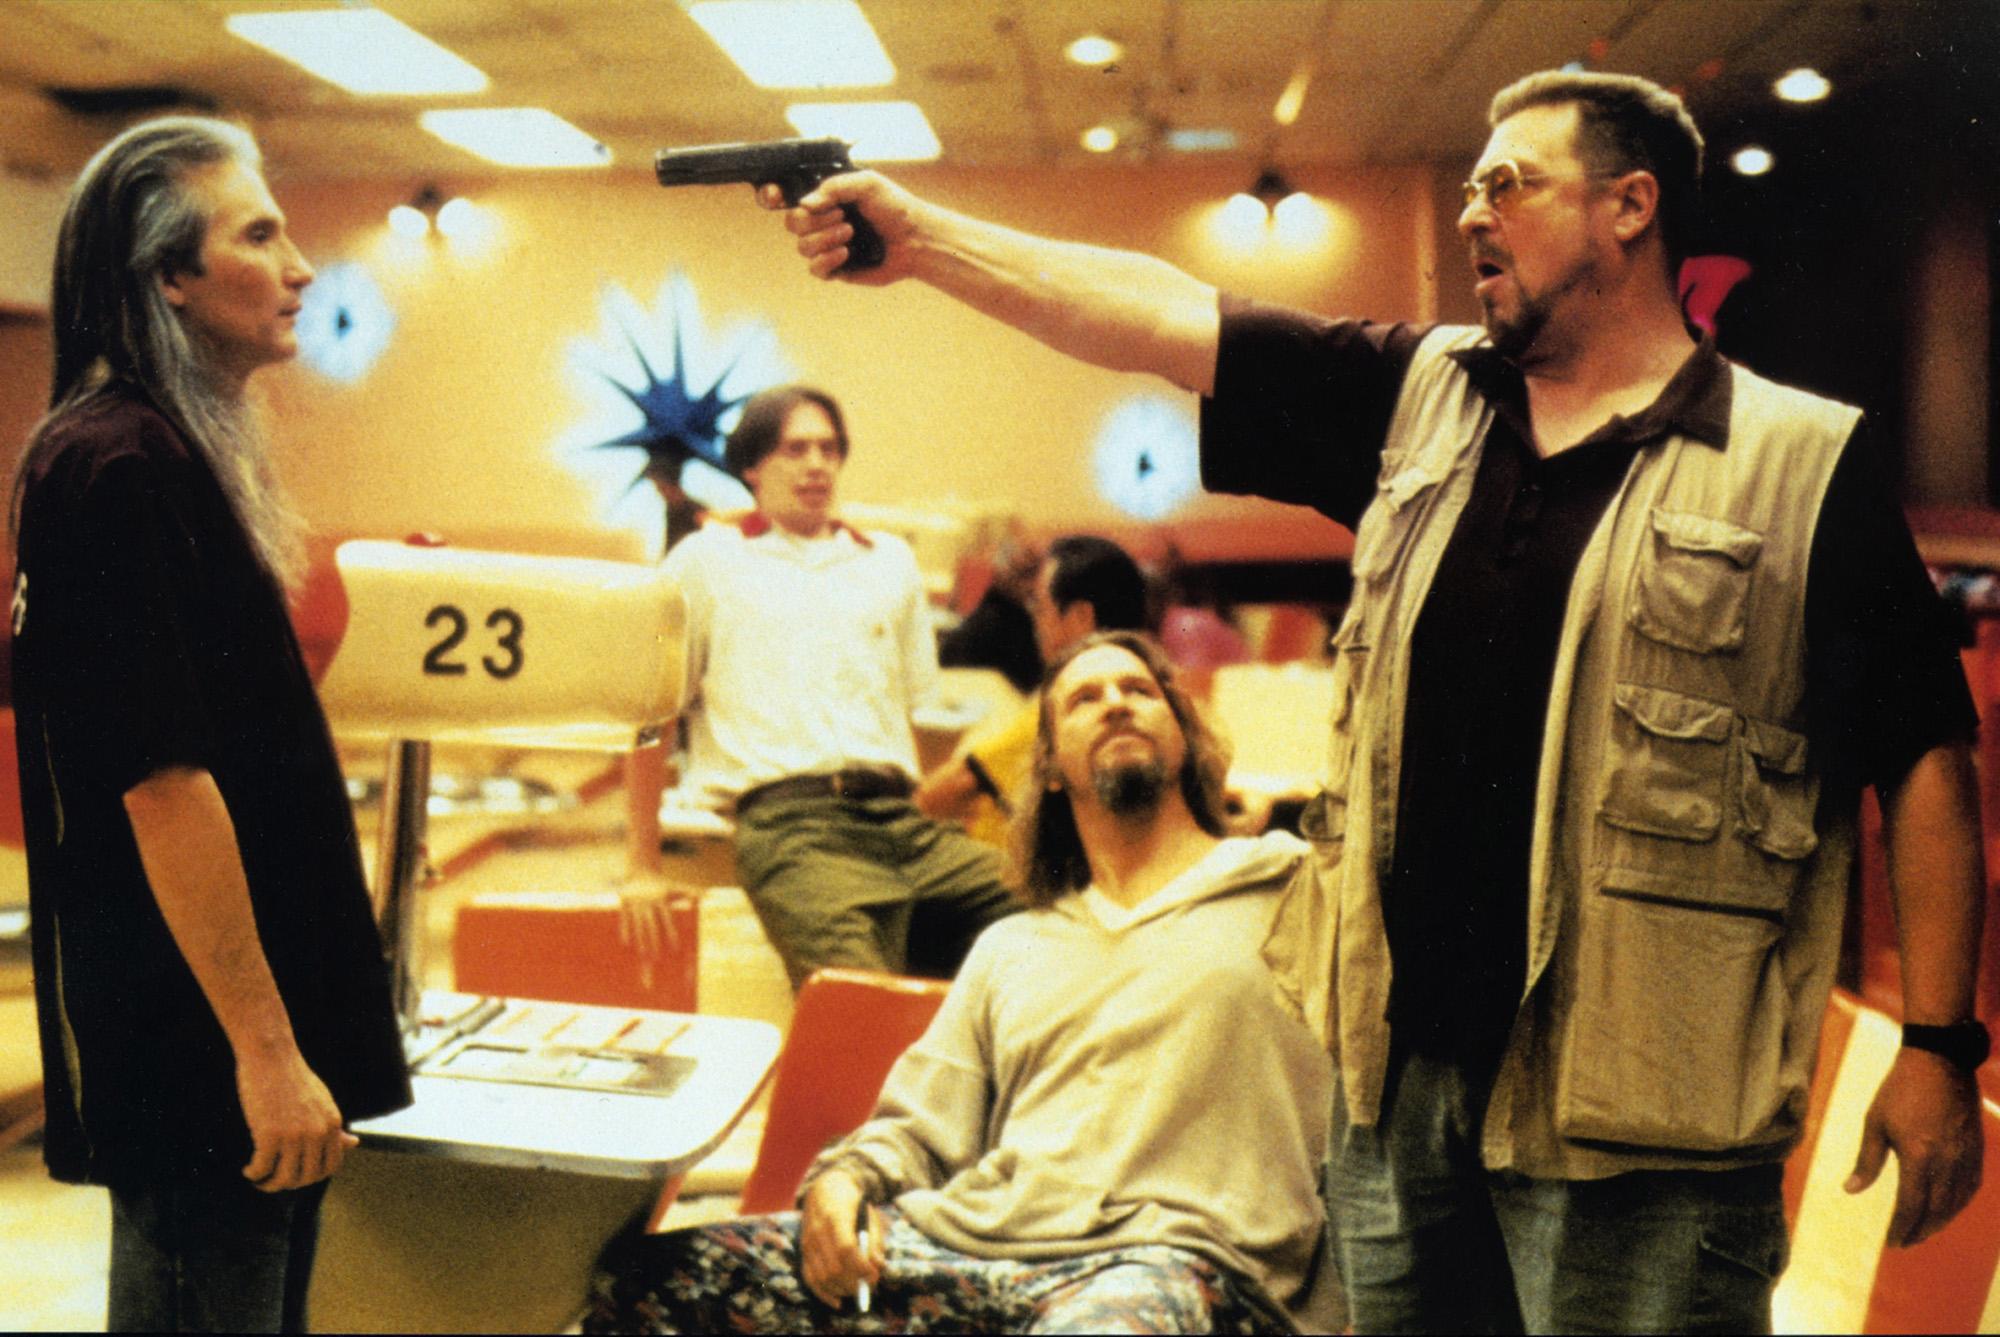 Jimmie Dale Gilmore, Jeff Bridges, John Goodman dans "The Big Lebowski". [Photo12 via AFP - POLYGRAM FILMED ENTERTAINMENT]